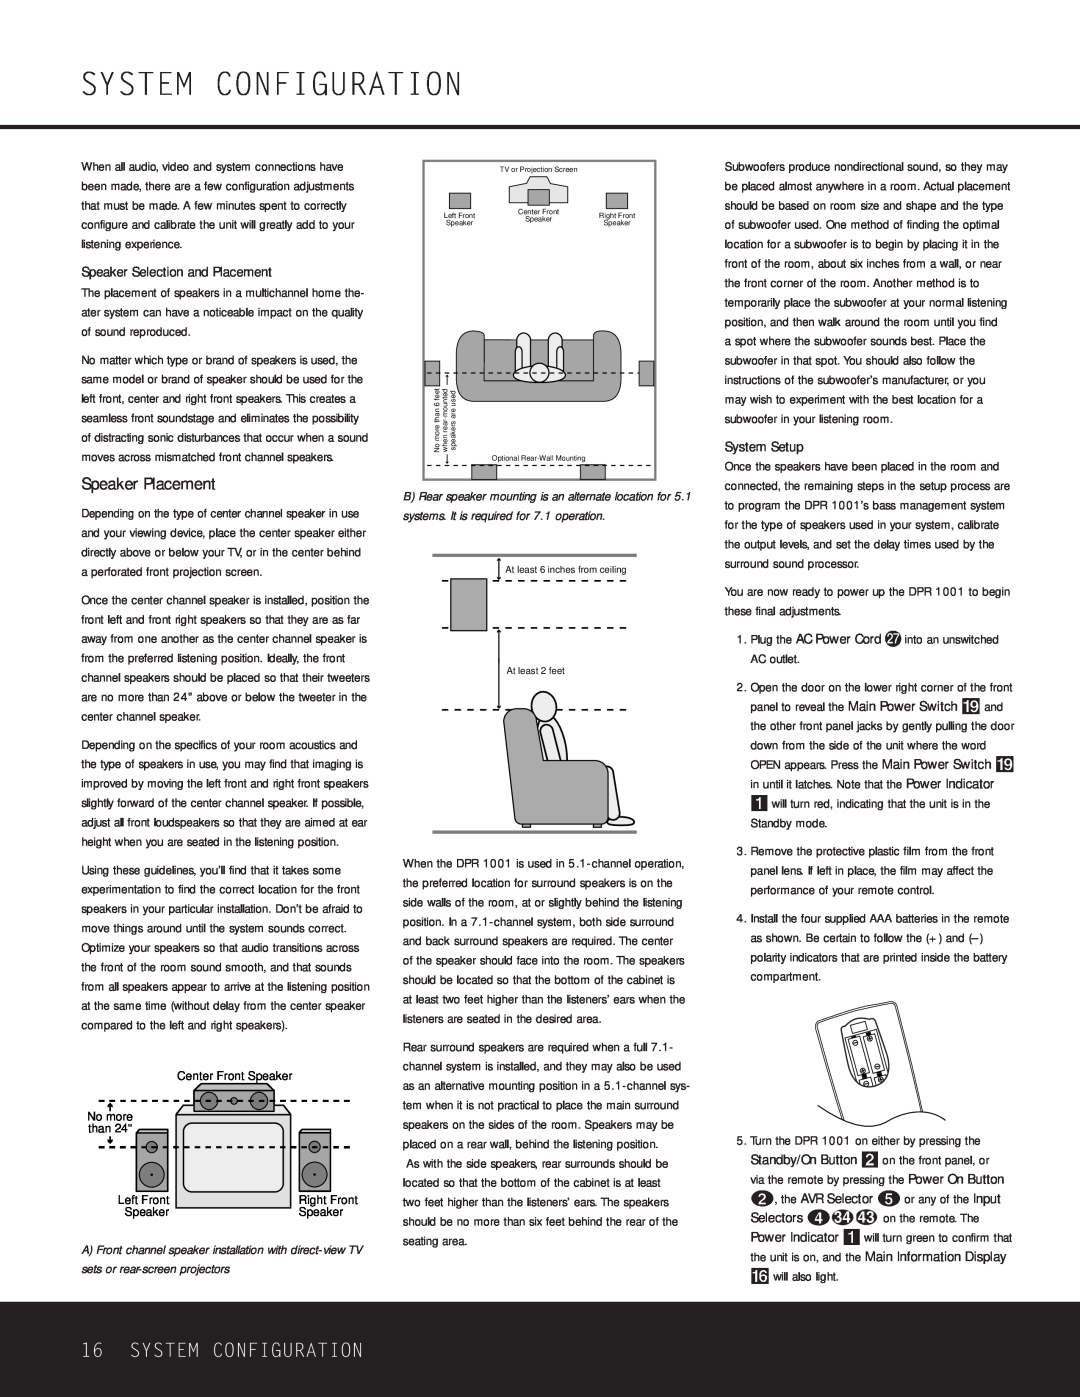 Harman-Kardon DPR 1001 owner manual System Configuration, Speaker Placement, Speaker Selection and Placement, System Setup 